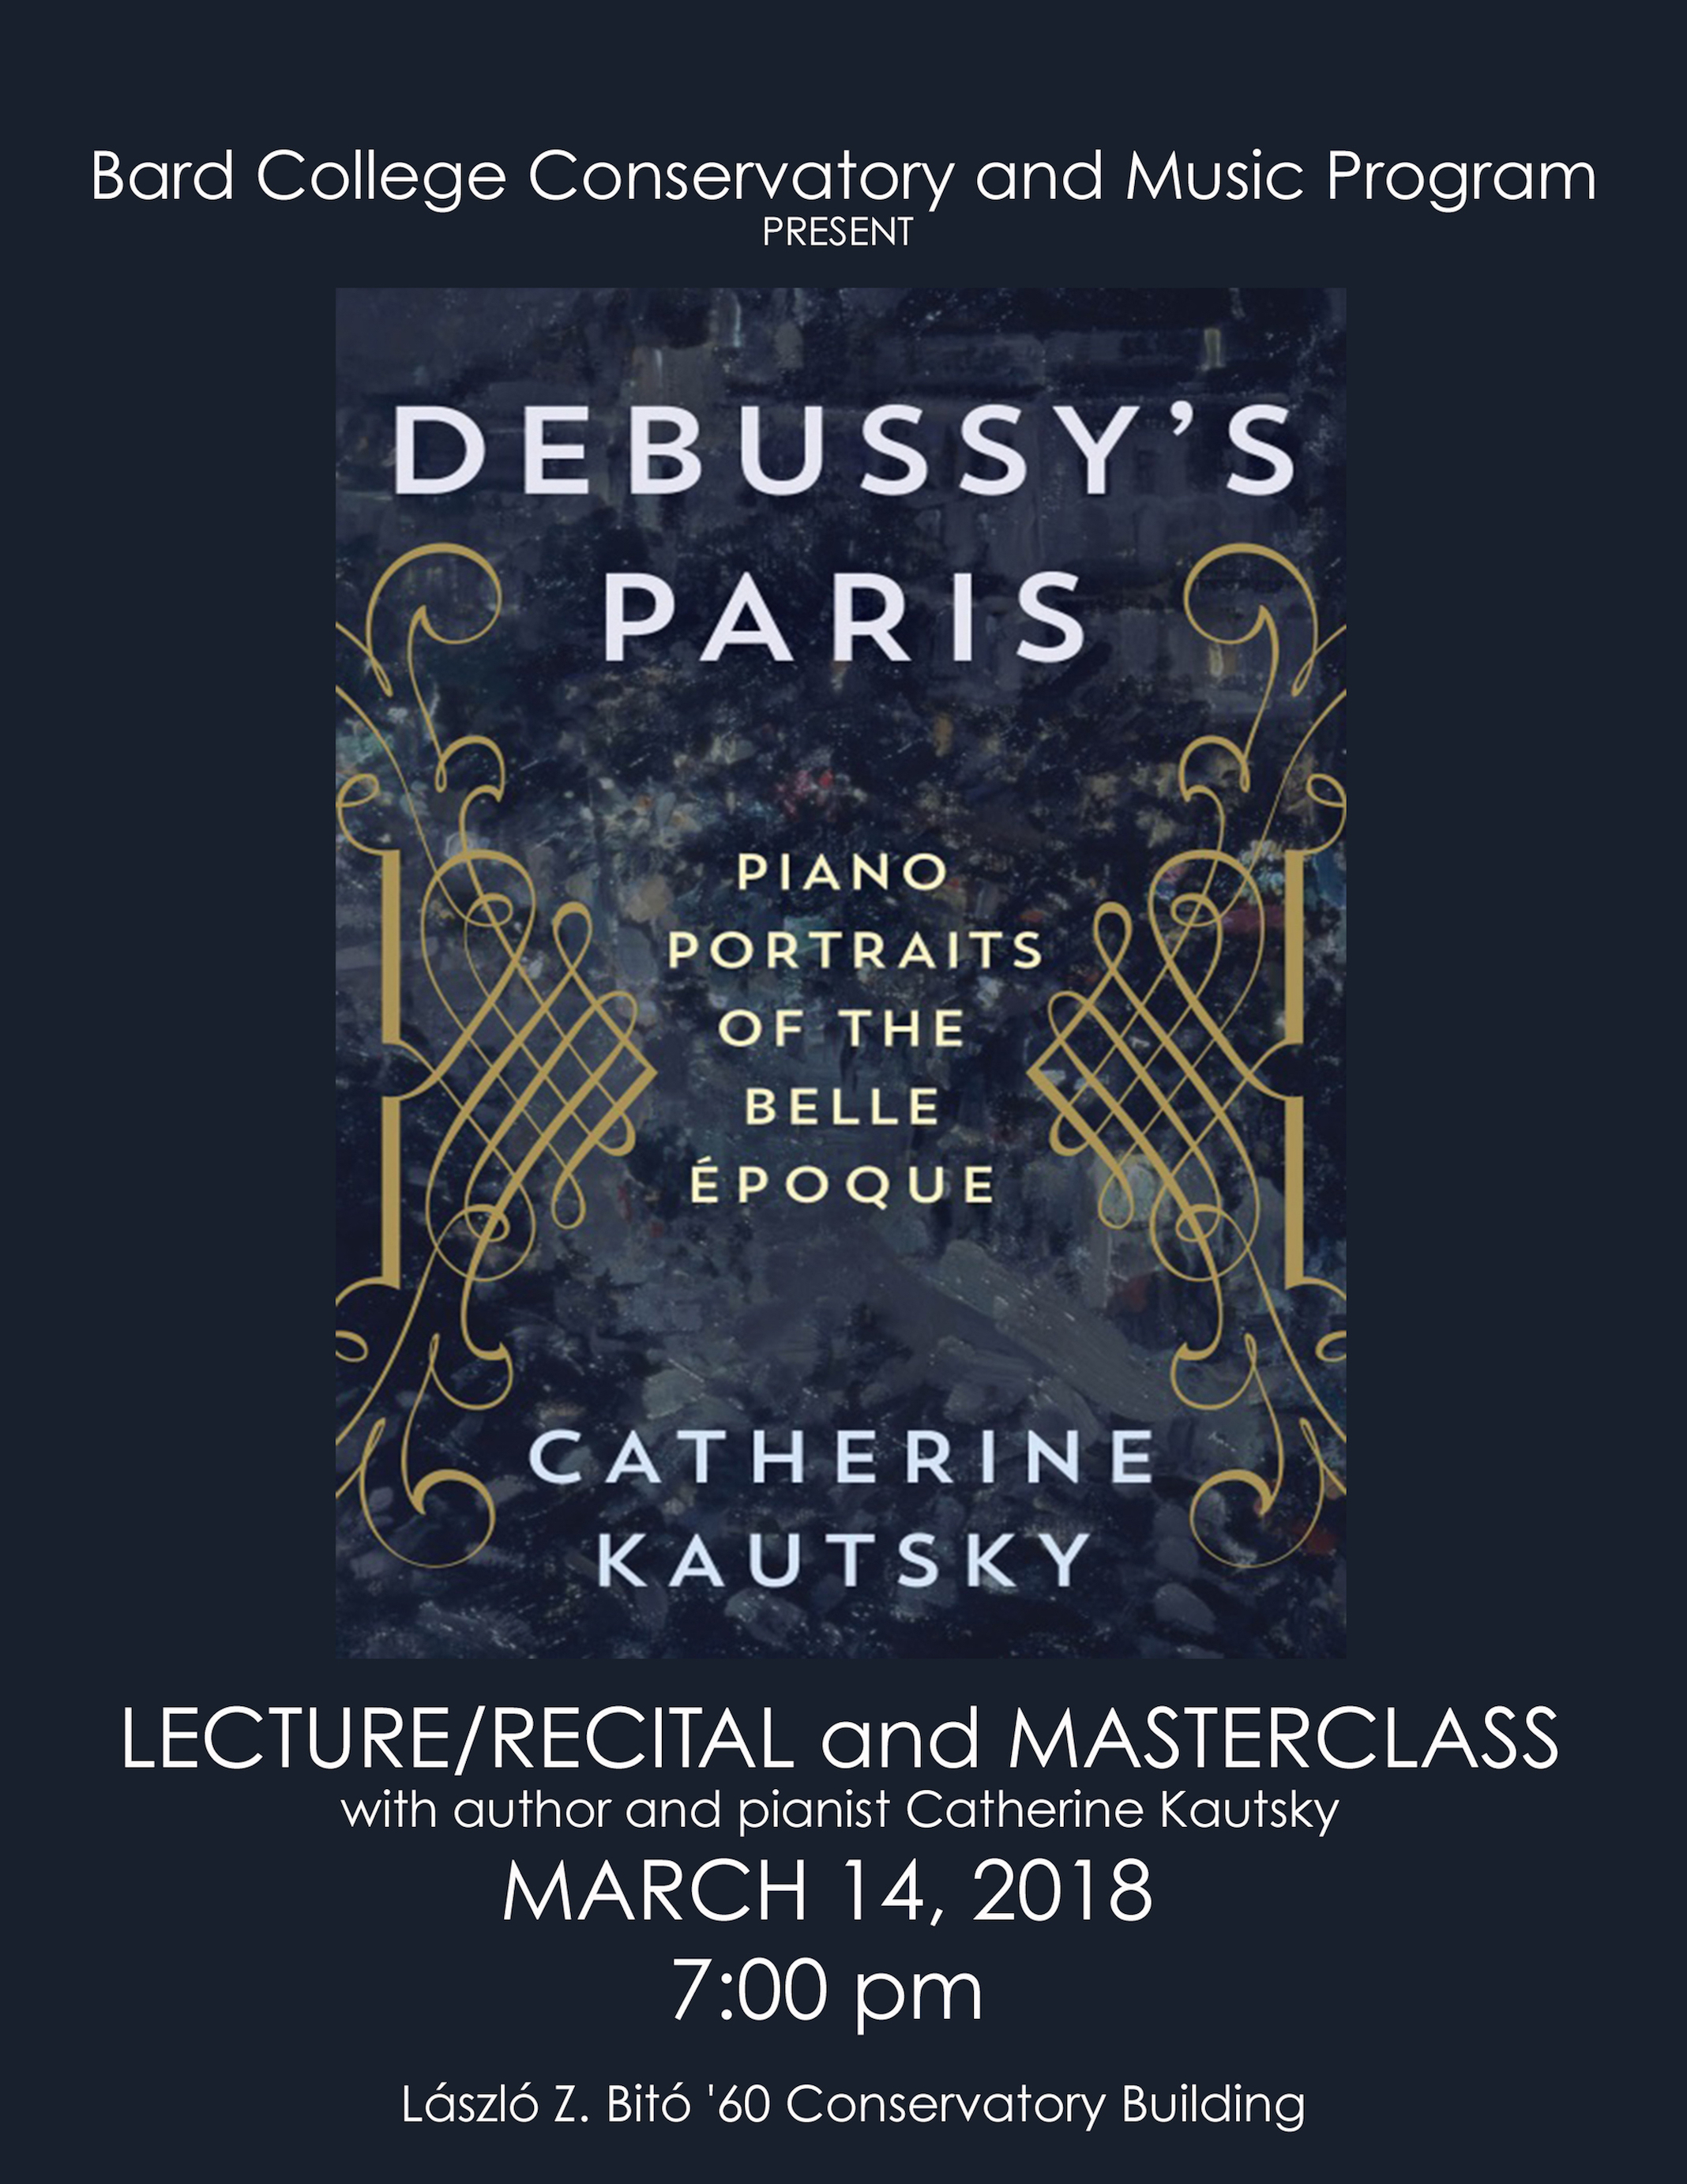 Catherine Kautsky - author and pianist